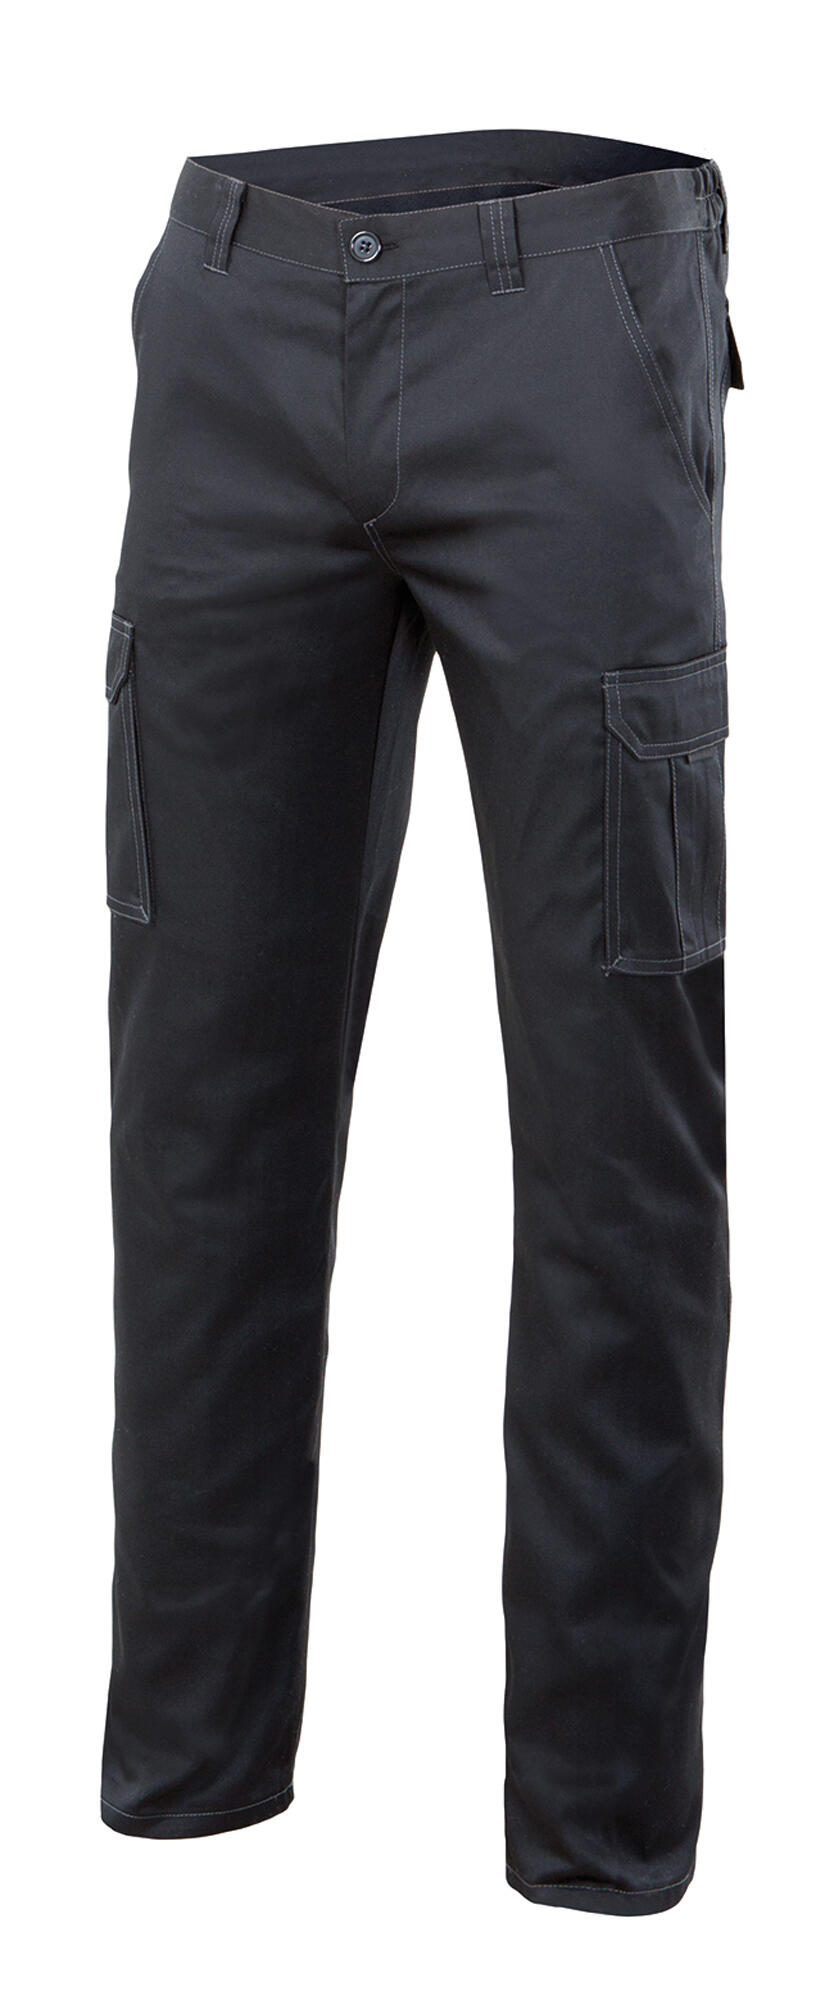 Pantalon de trabajo multibolsillo stretch negro t36